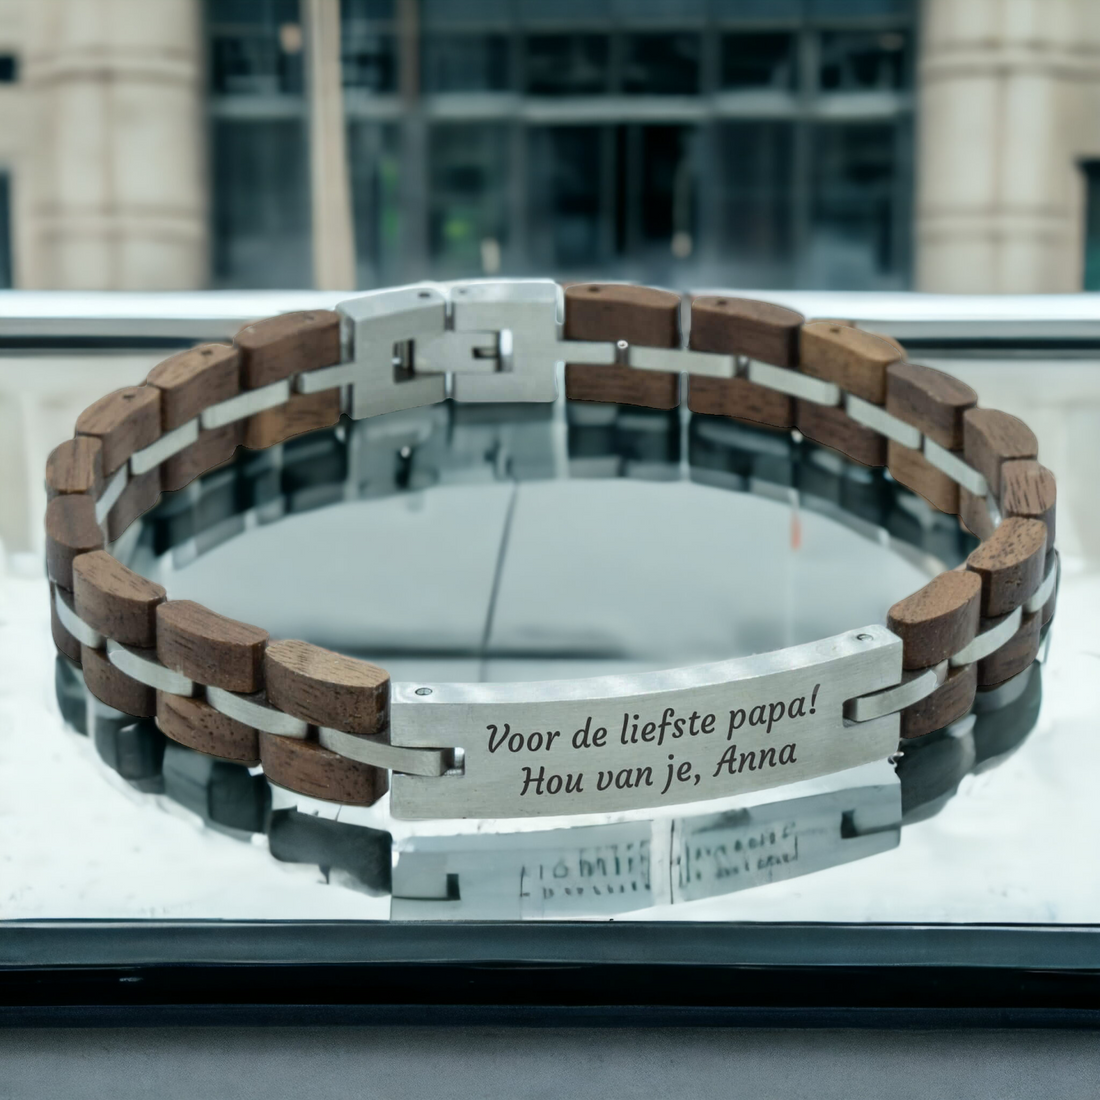 Own text on Engraved Wooden Walnut bracelet